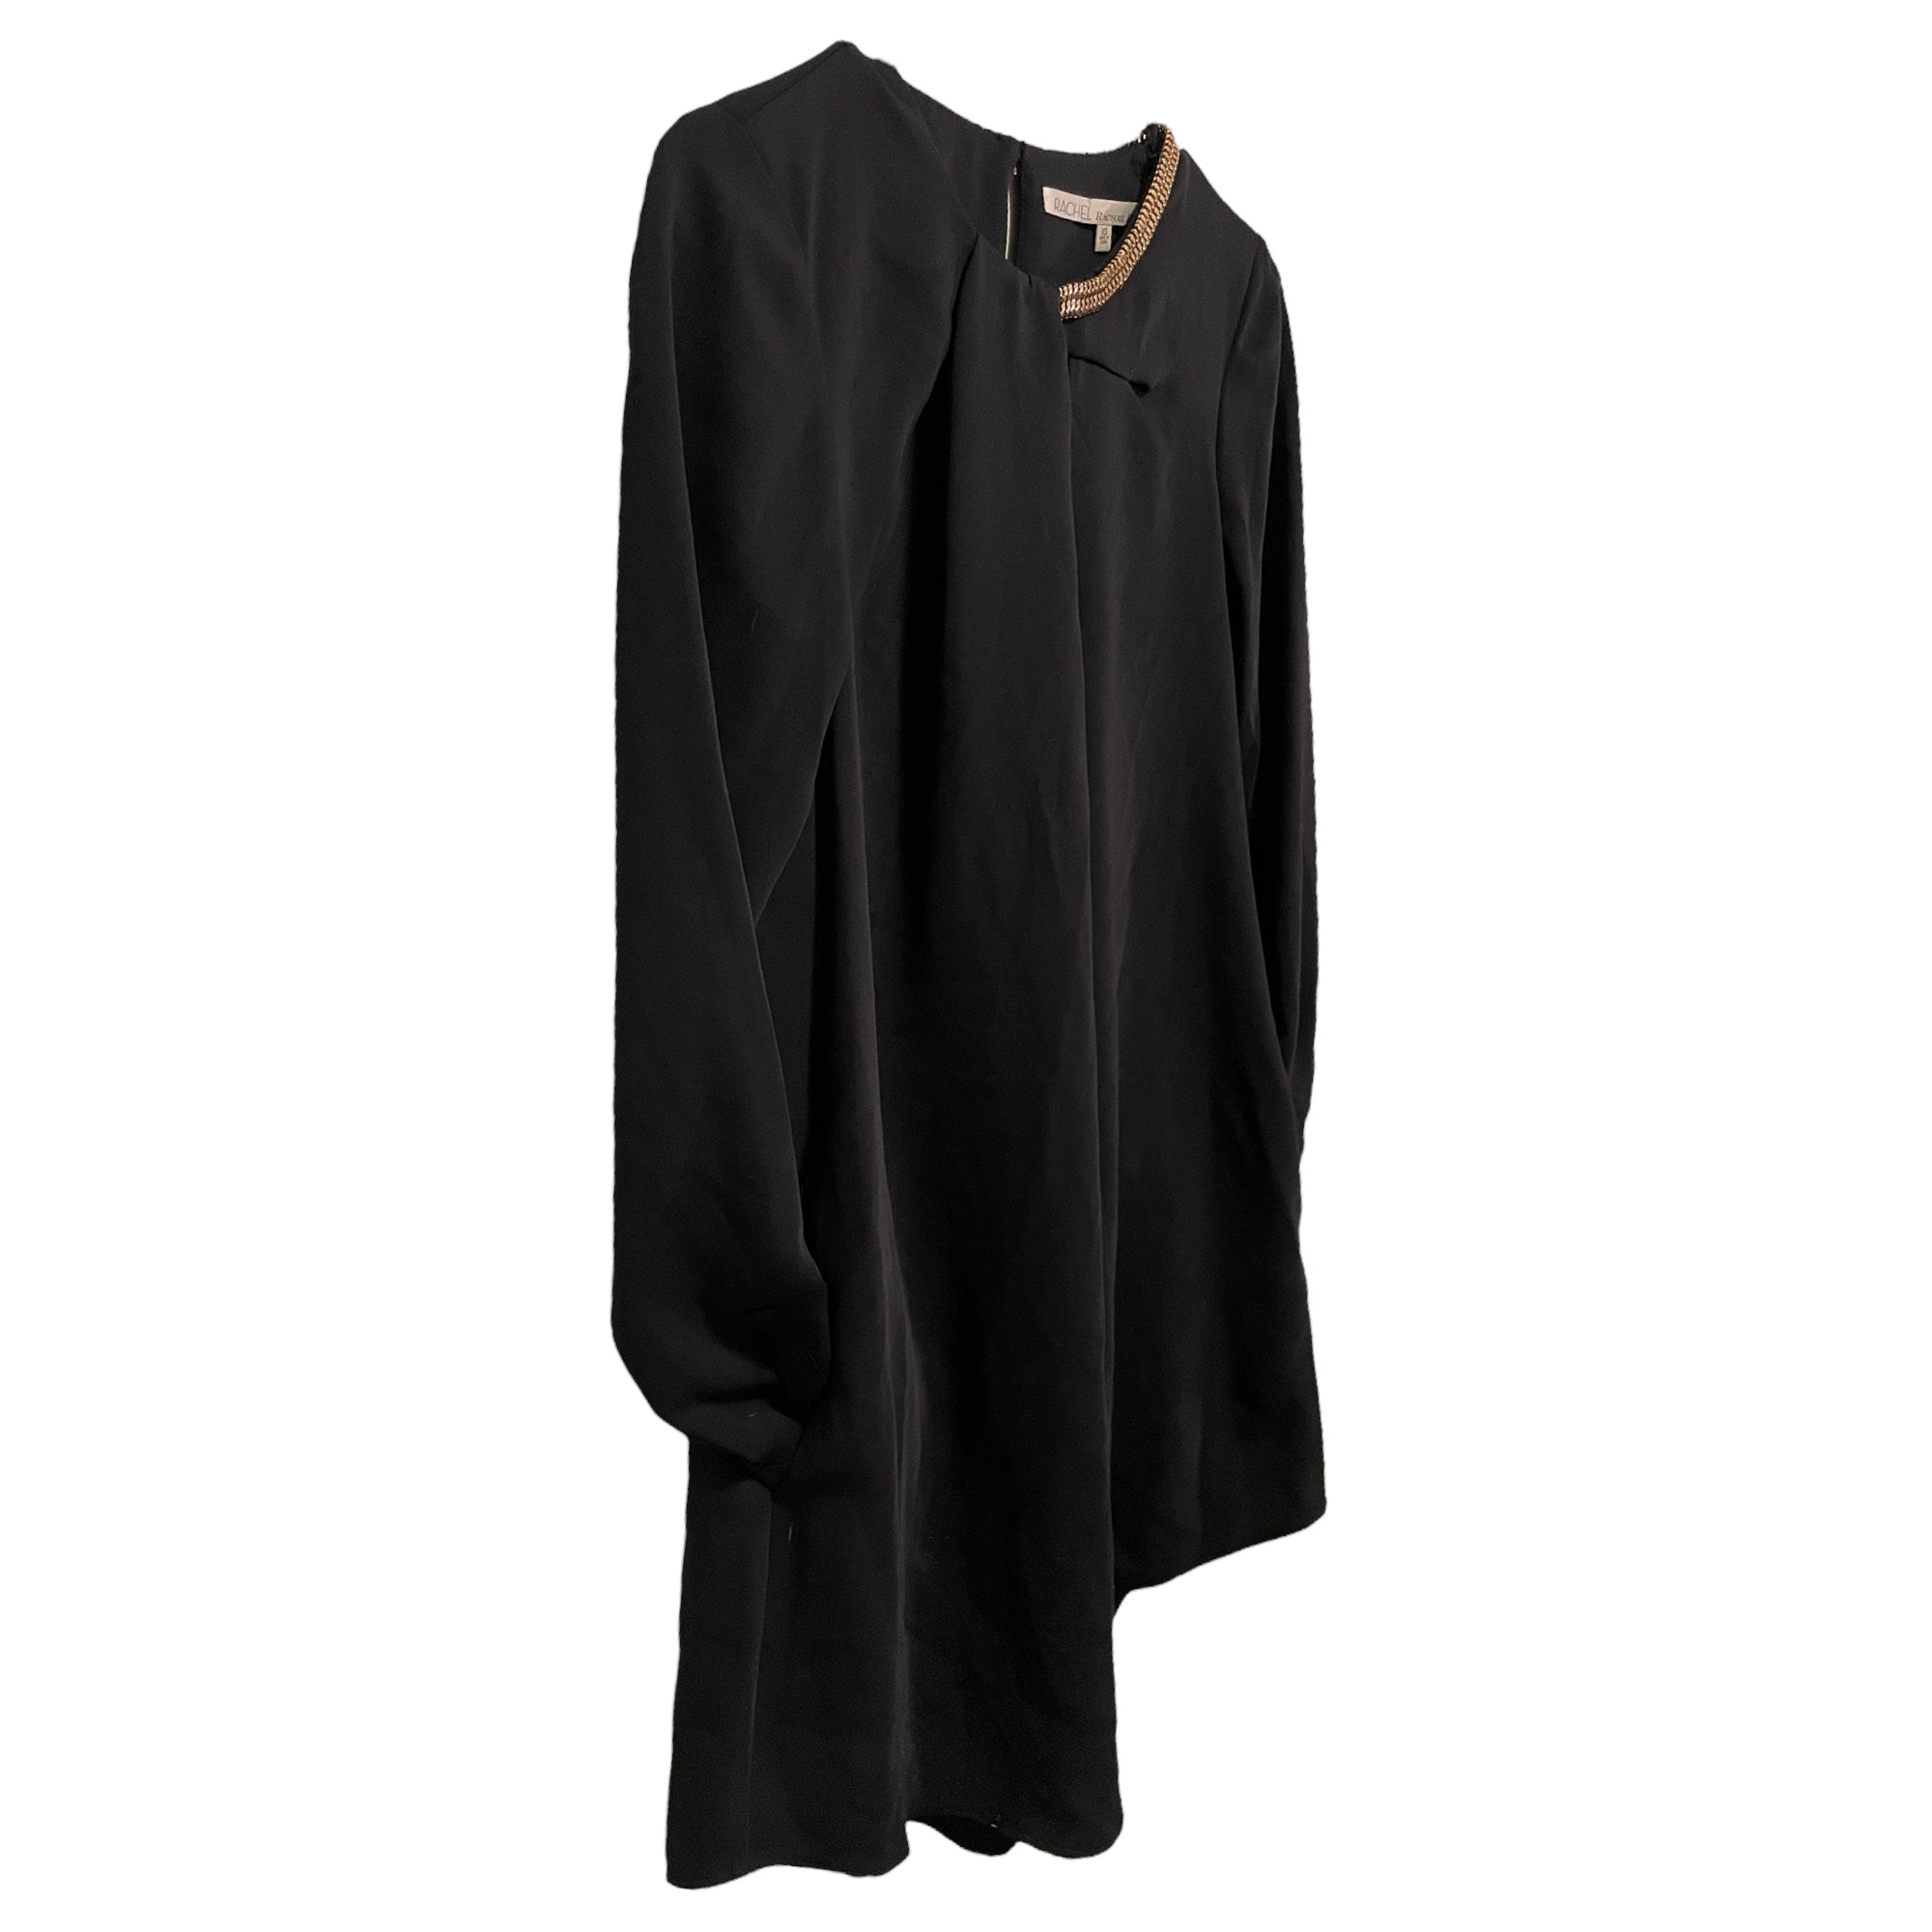 RACHEL Rachel Roy Black Long Sleeve Dress/Top with Gold Neckline Accent & Pockets |Size:XS|